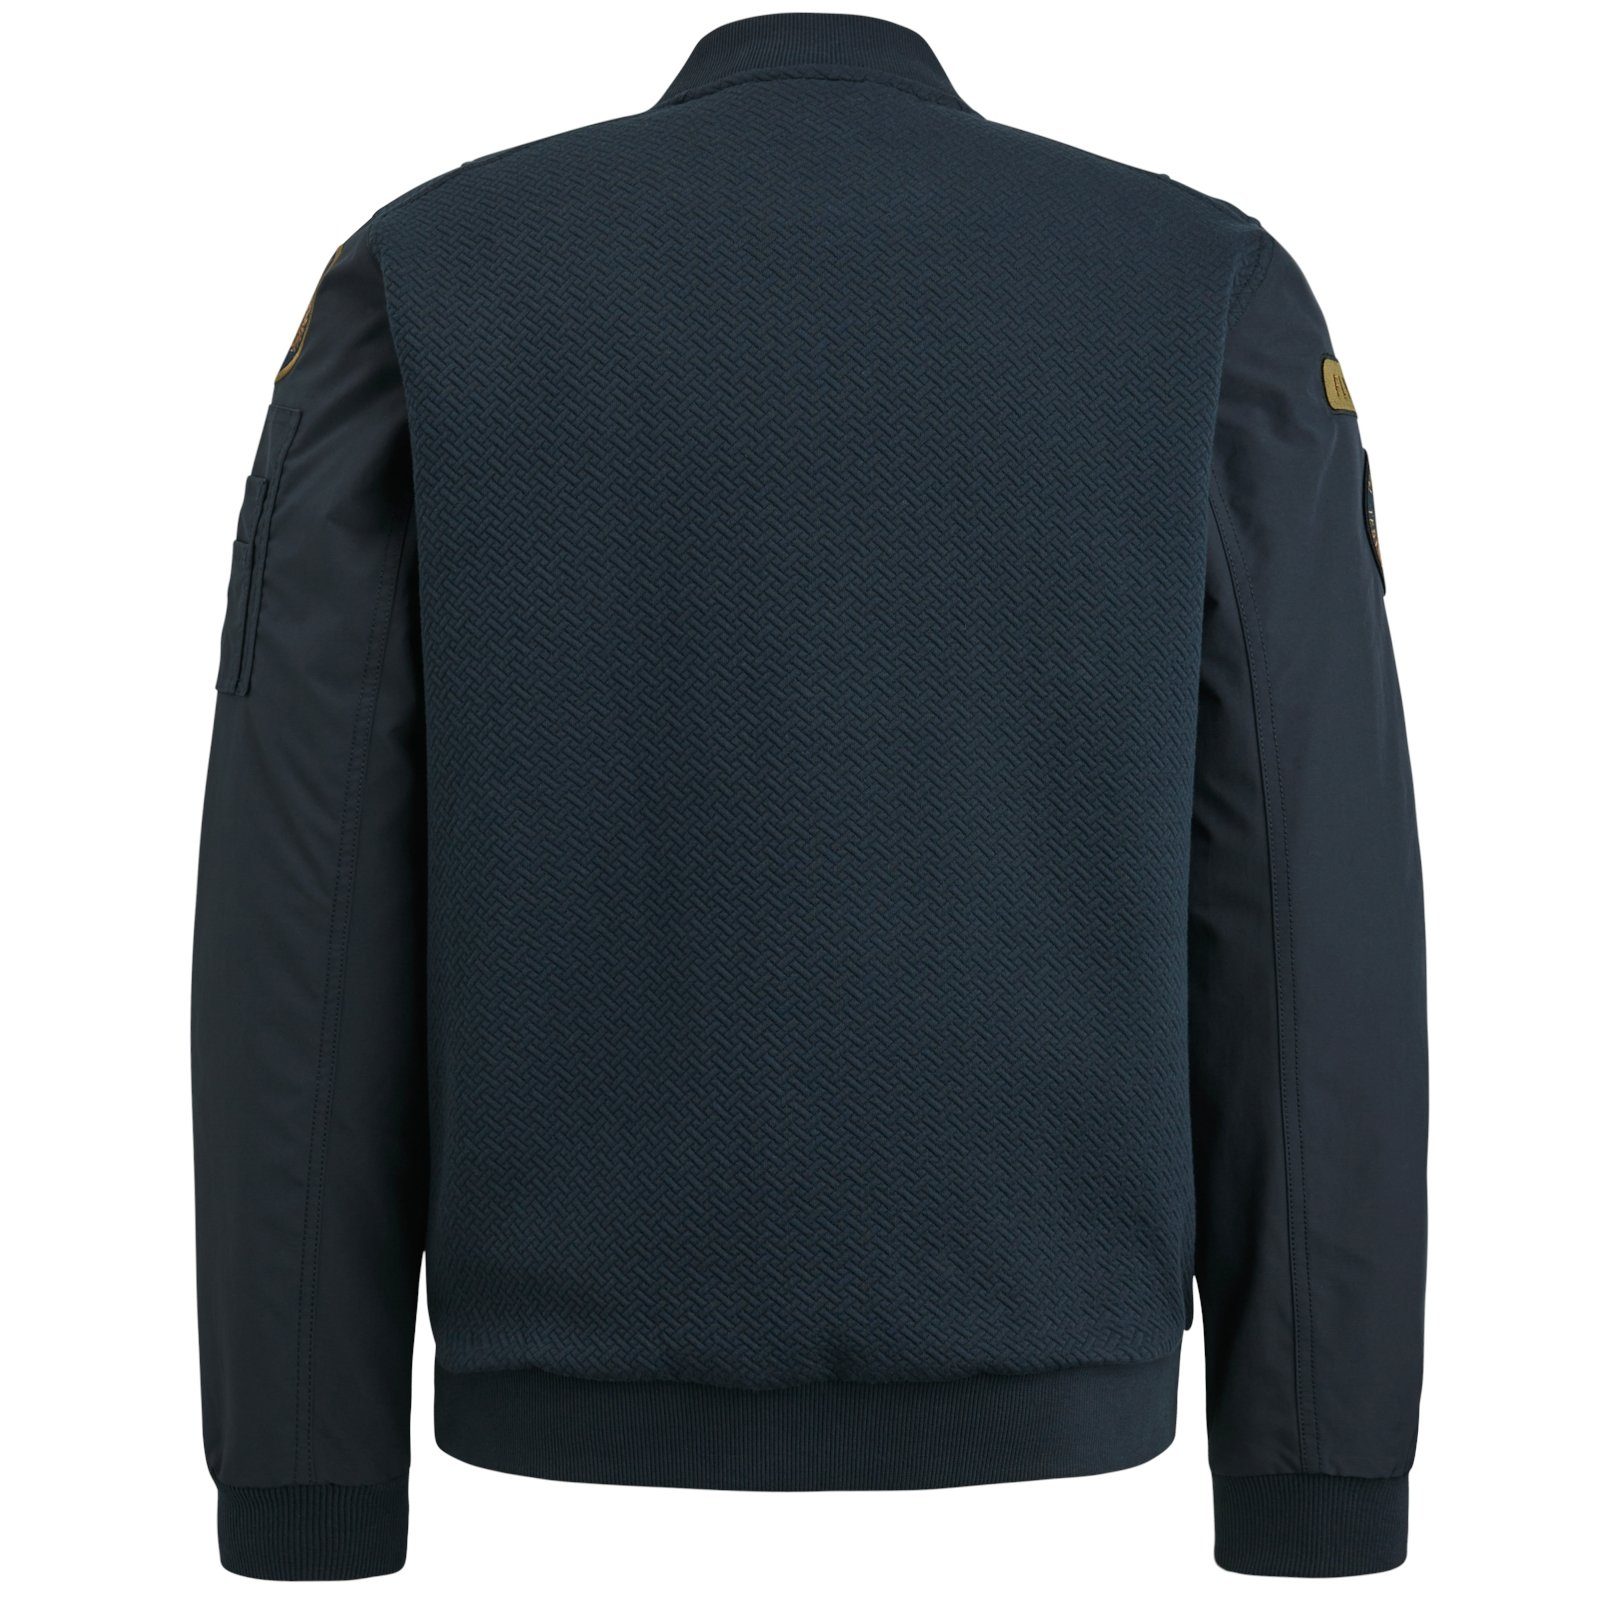 interlock LEGEND swea jacket PME Sweatshirt Zip jacquard